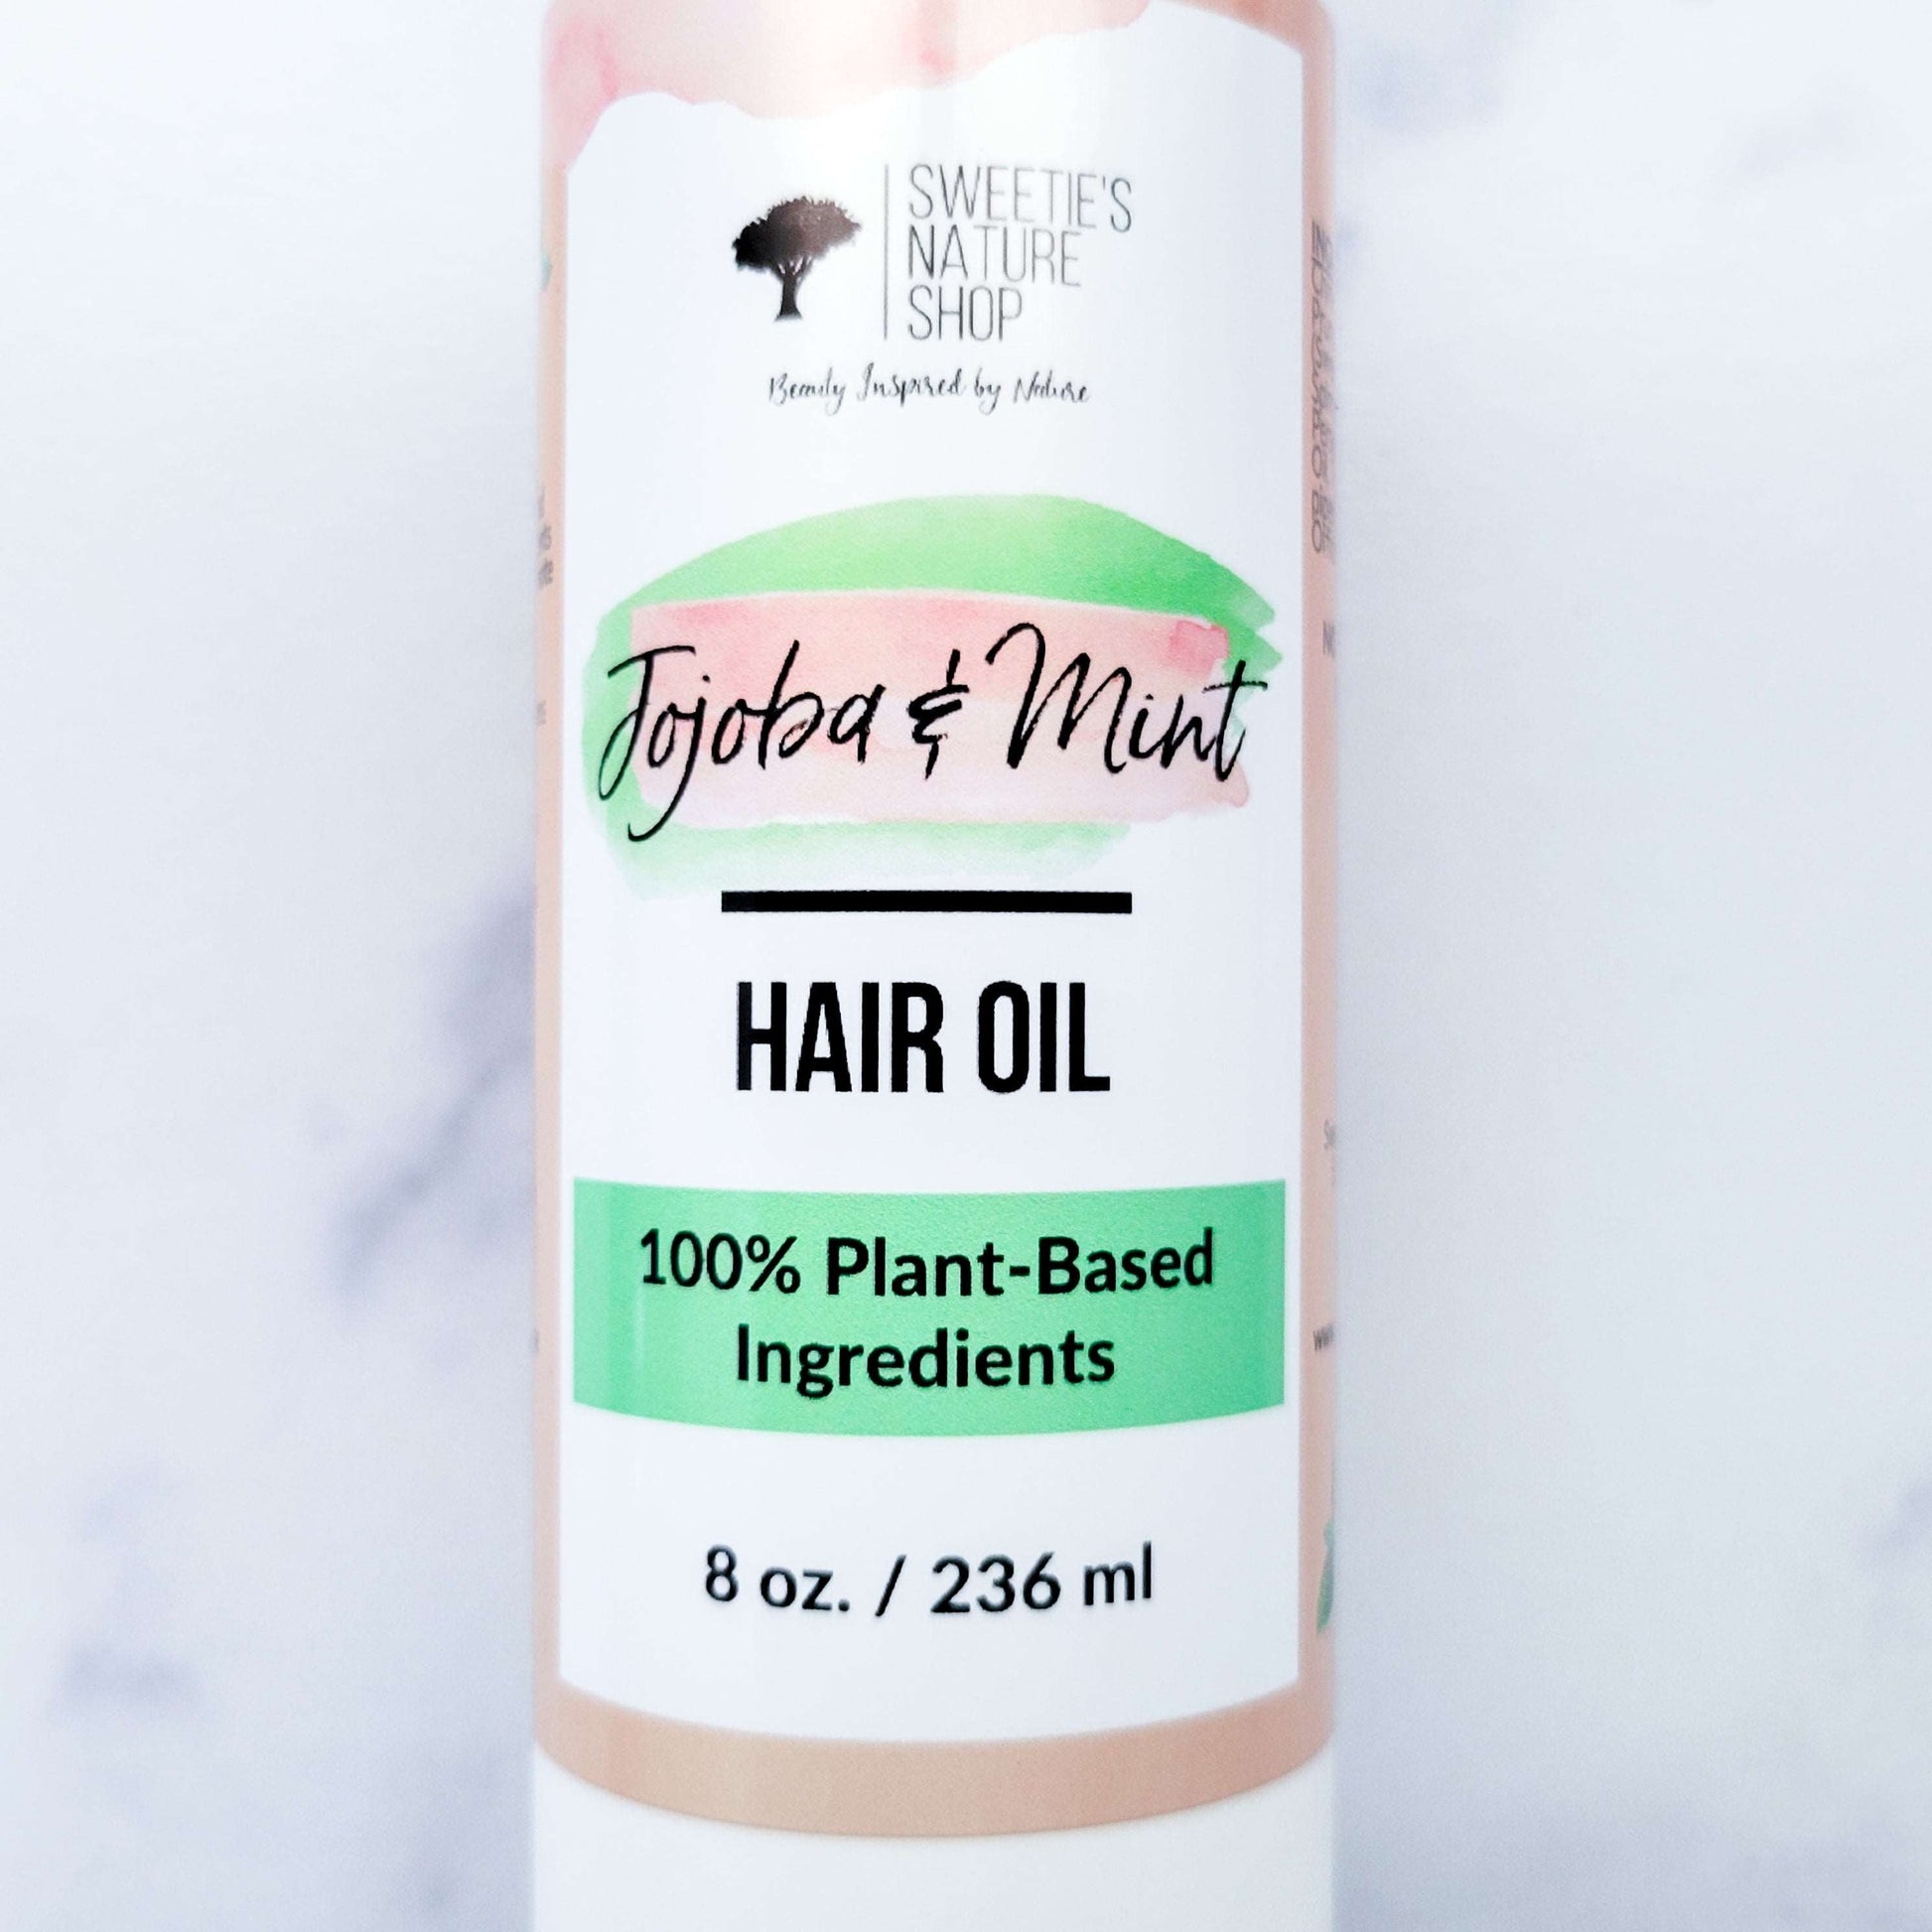 Jojoba & Mint Hair Oil